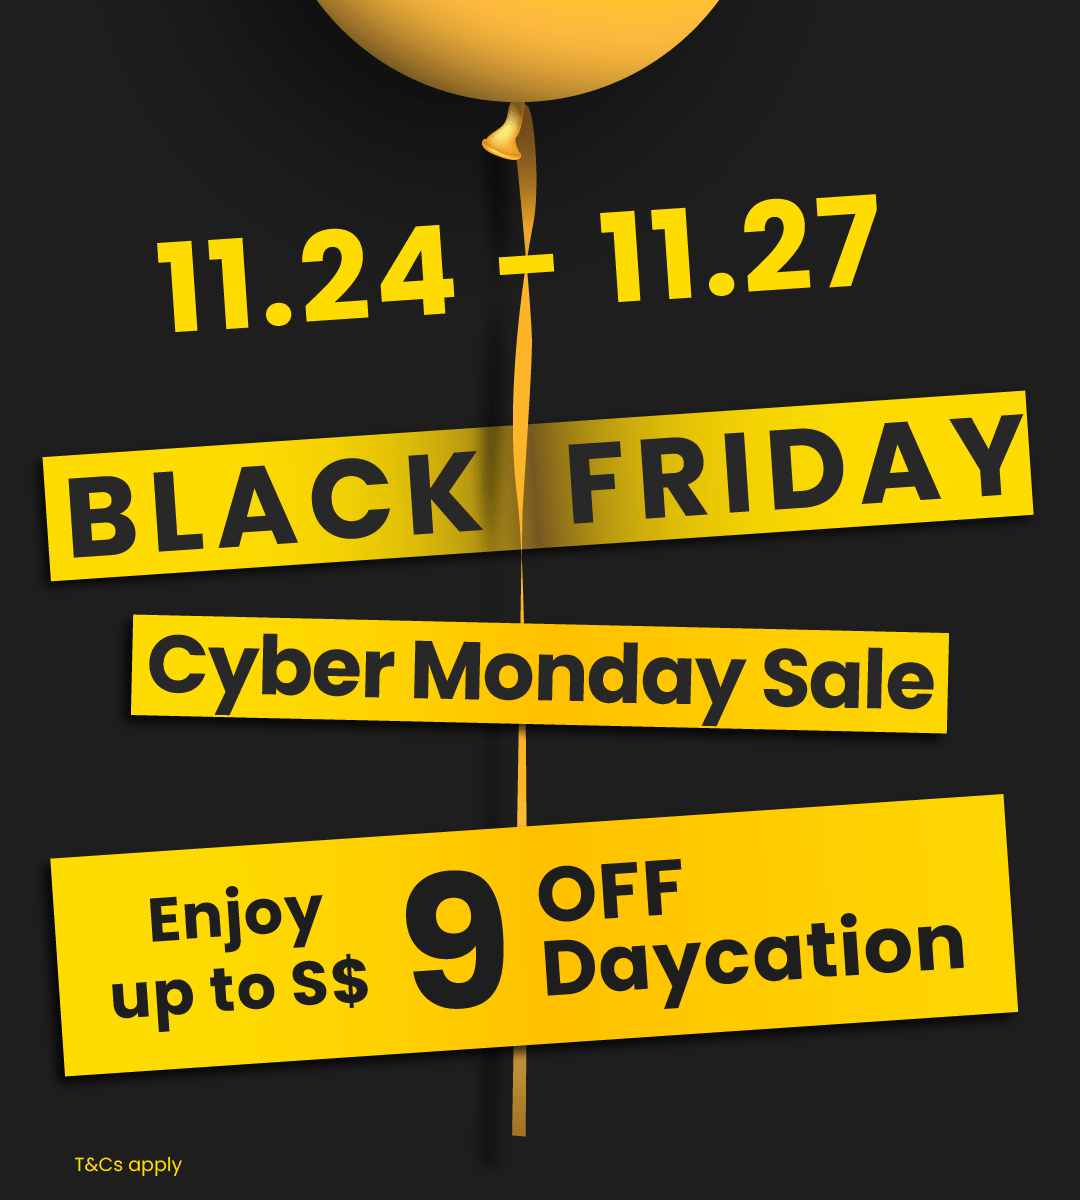 Black Friday x Cyber Monday Sale: S$9 off Daycation